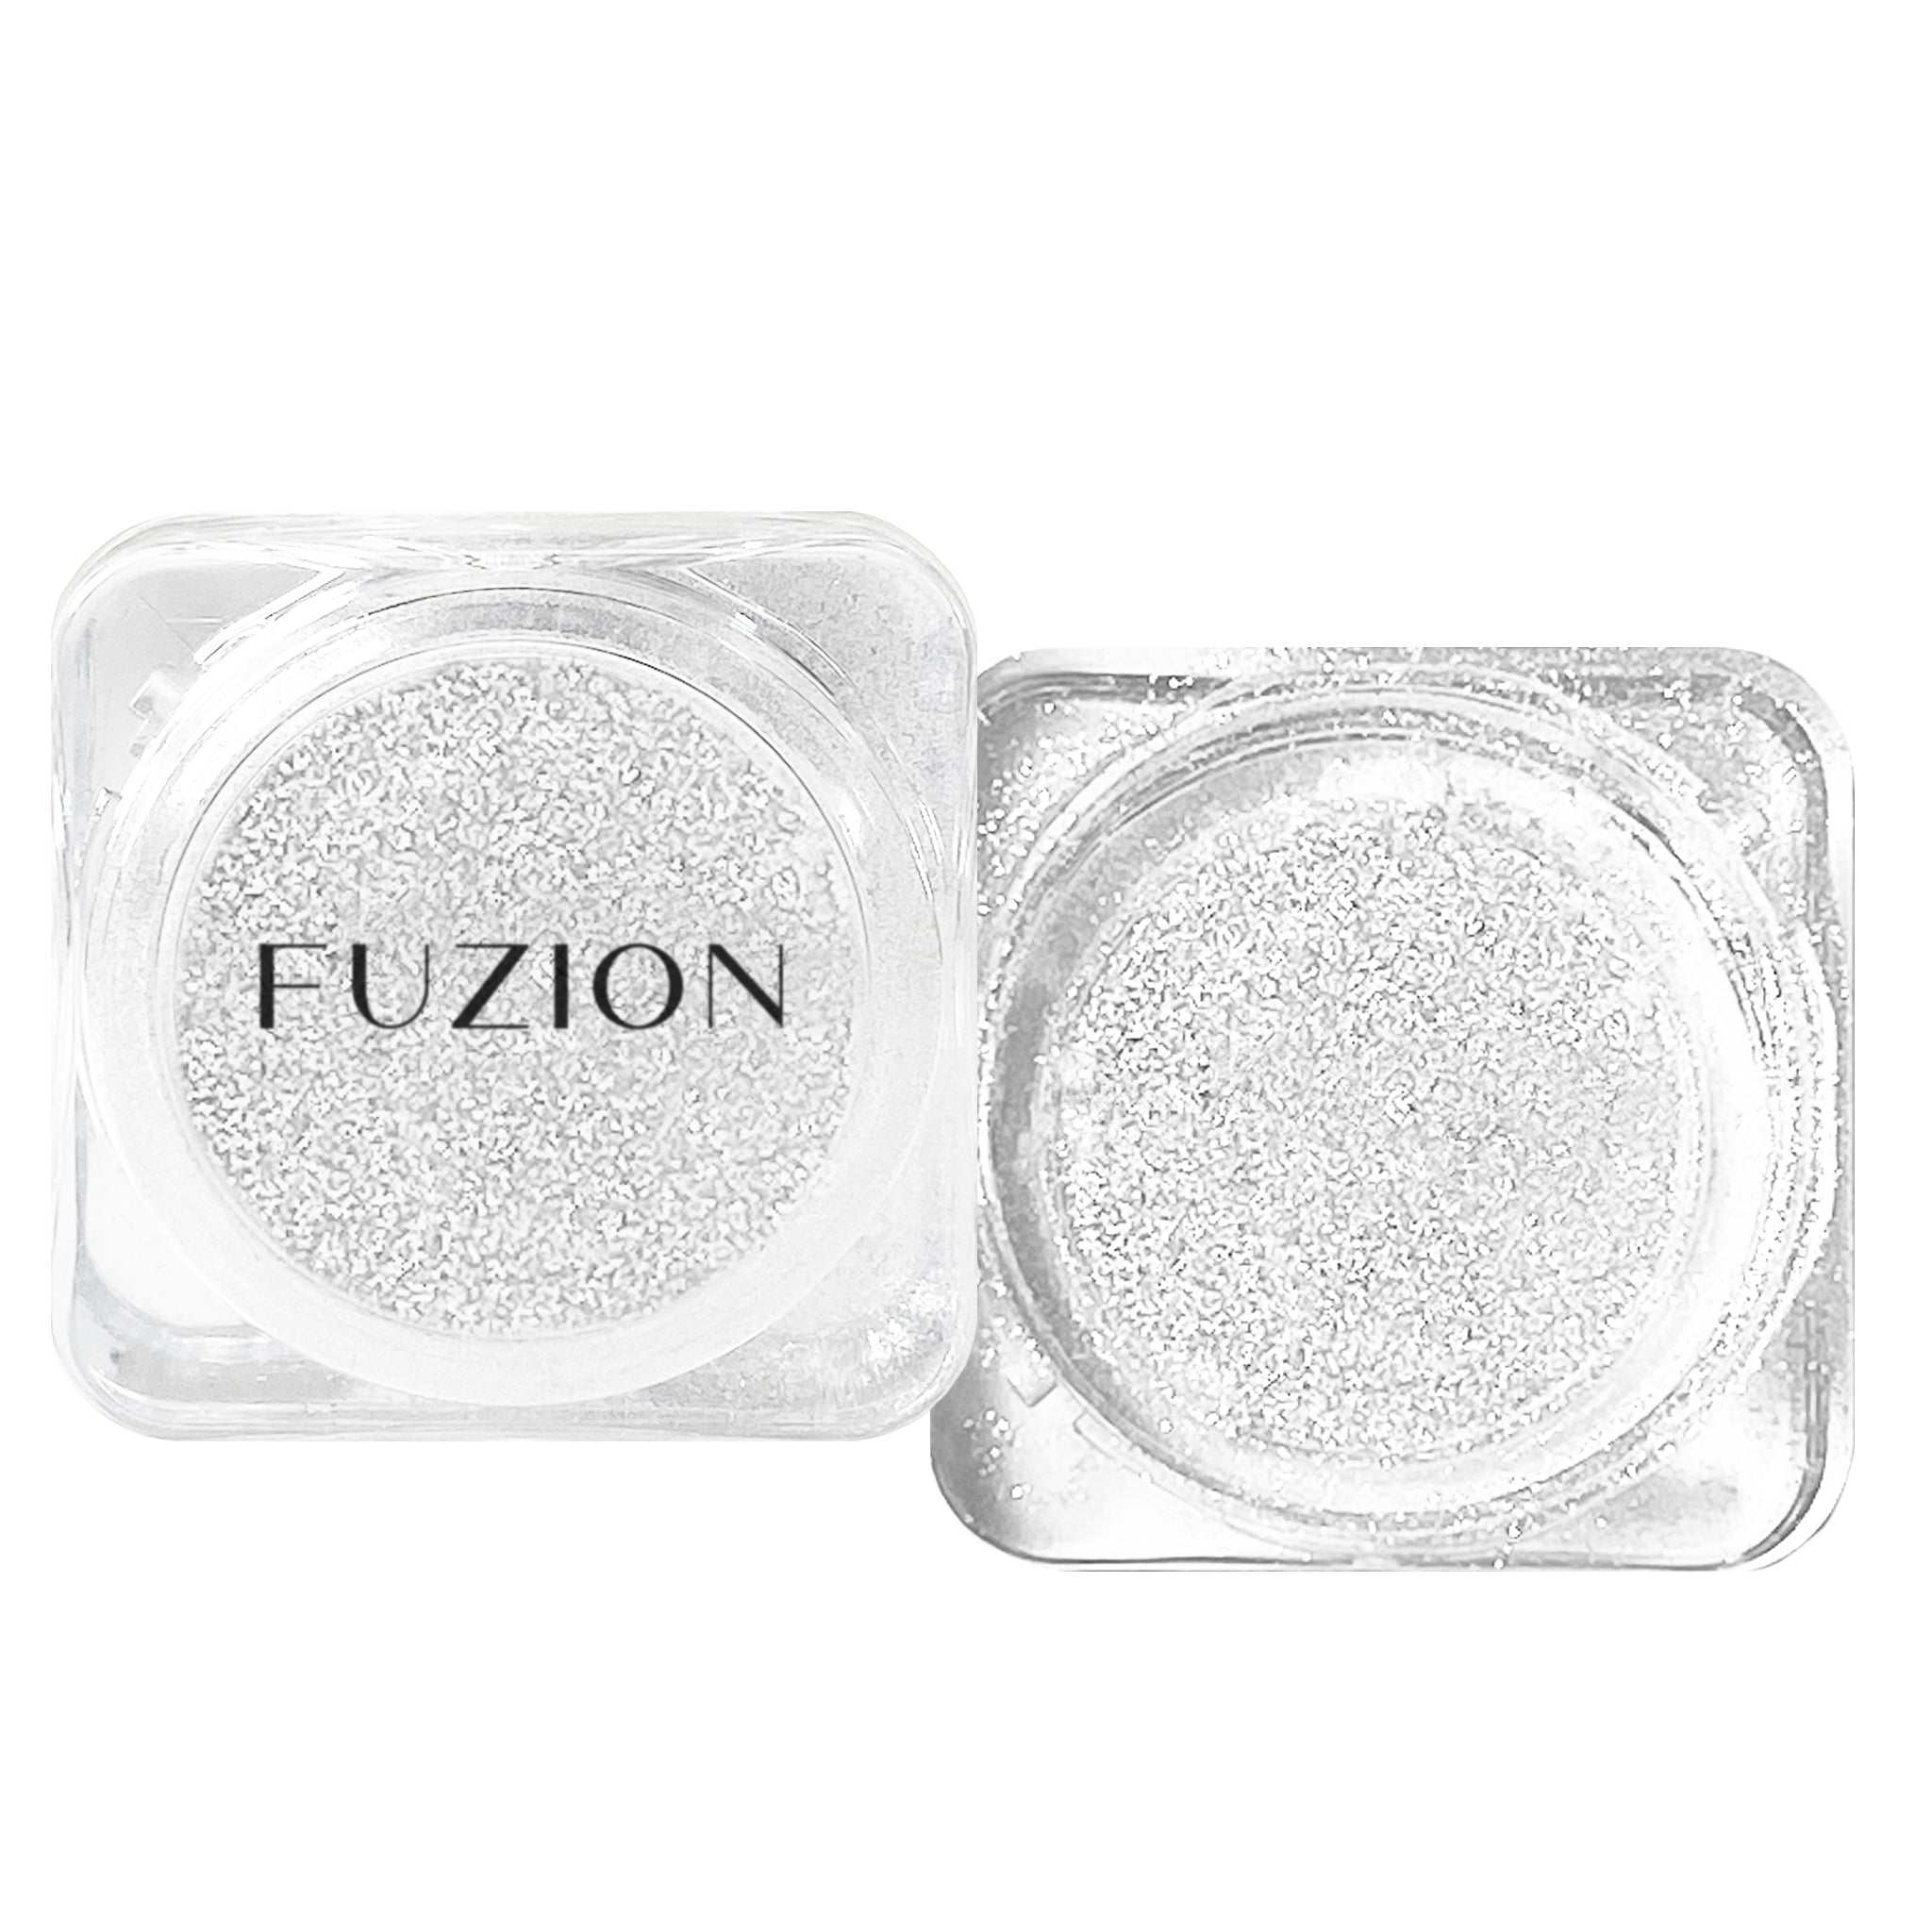 Fuzion White Chrome Pigment - Creata Beauty - Professional Beauty Products